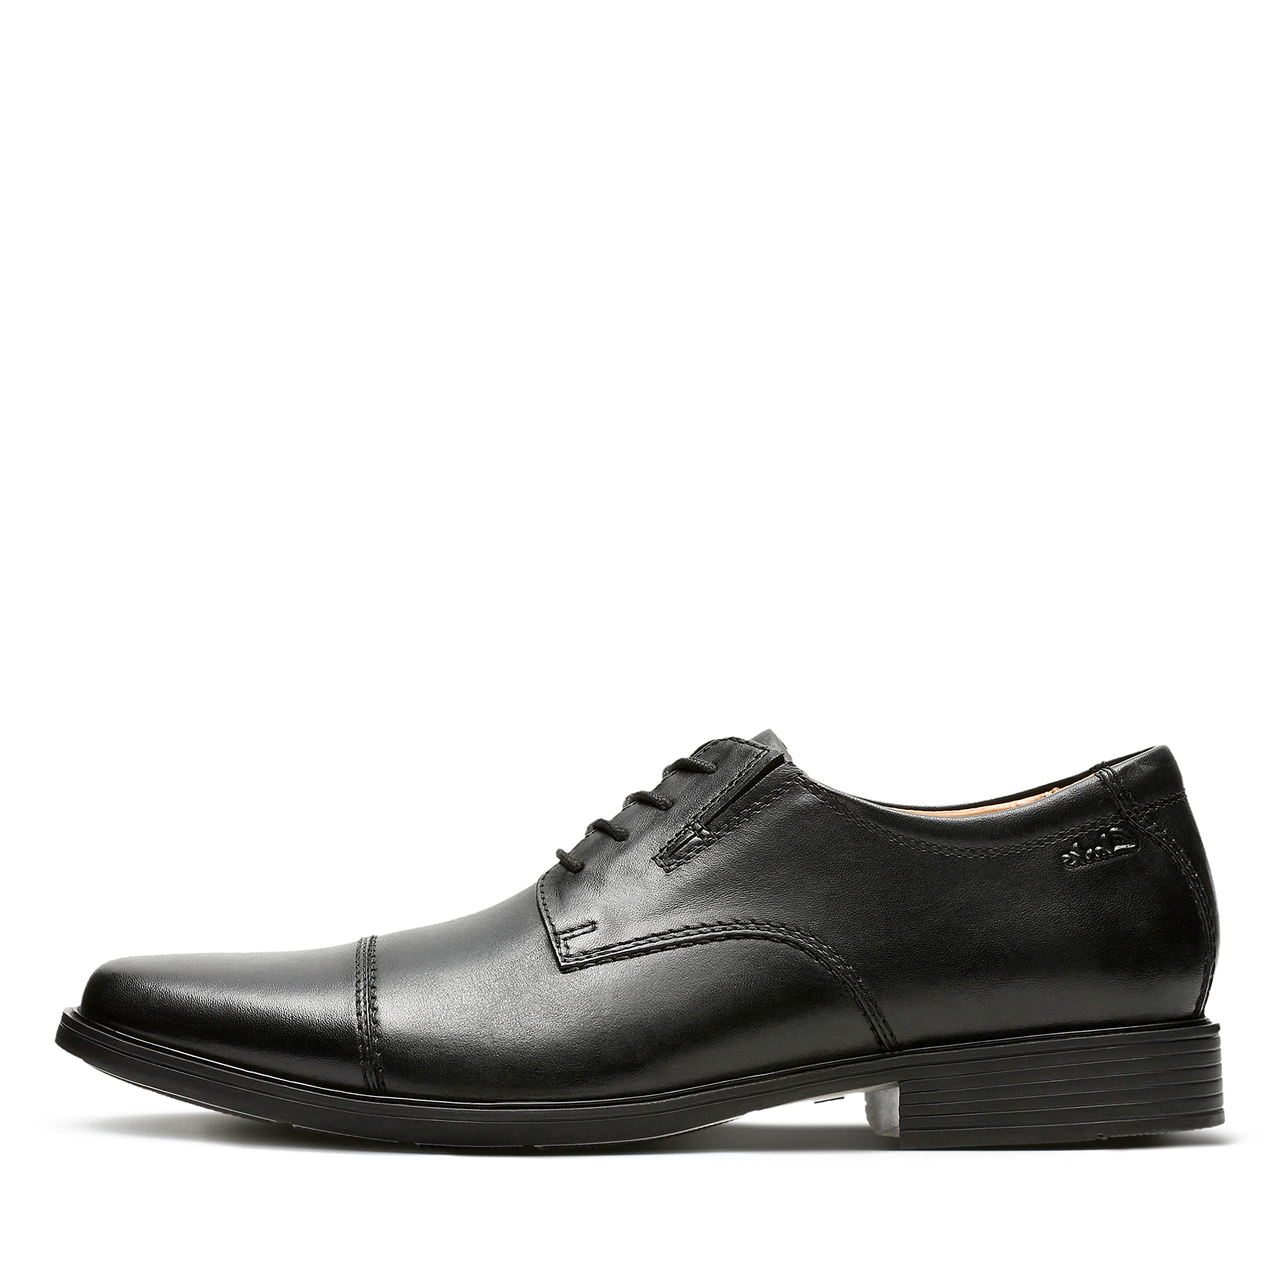 Clarks 男士 Tilden Cap 牛津鞋 ,Black Leather,8.5 D(M) US 到手价￥398